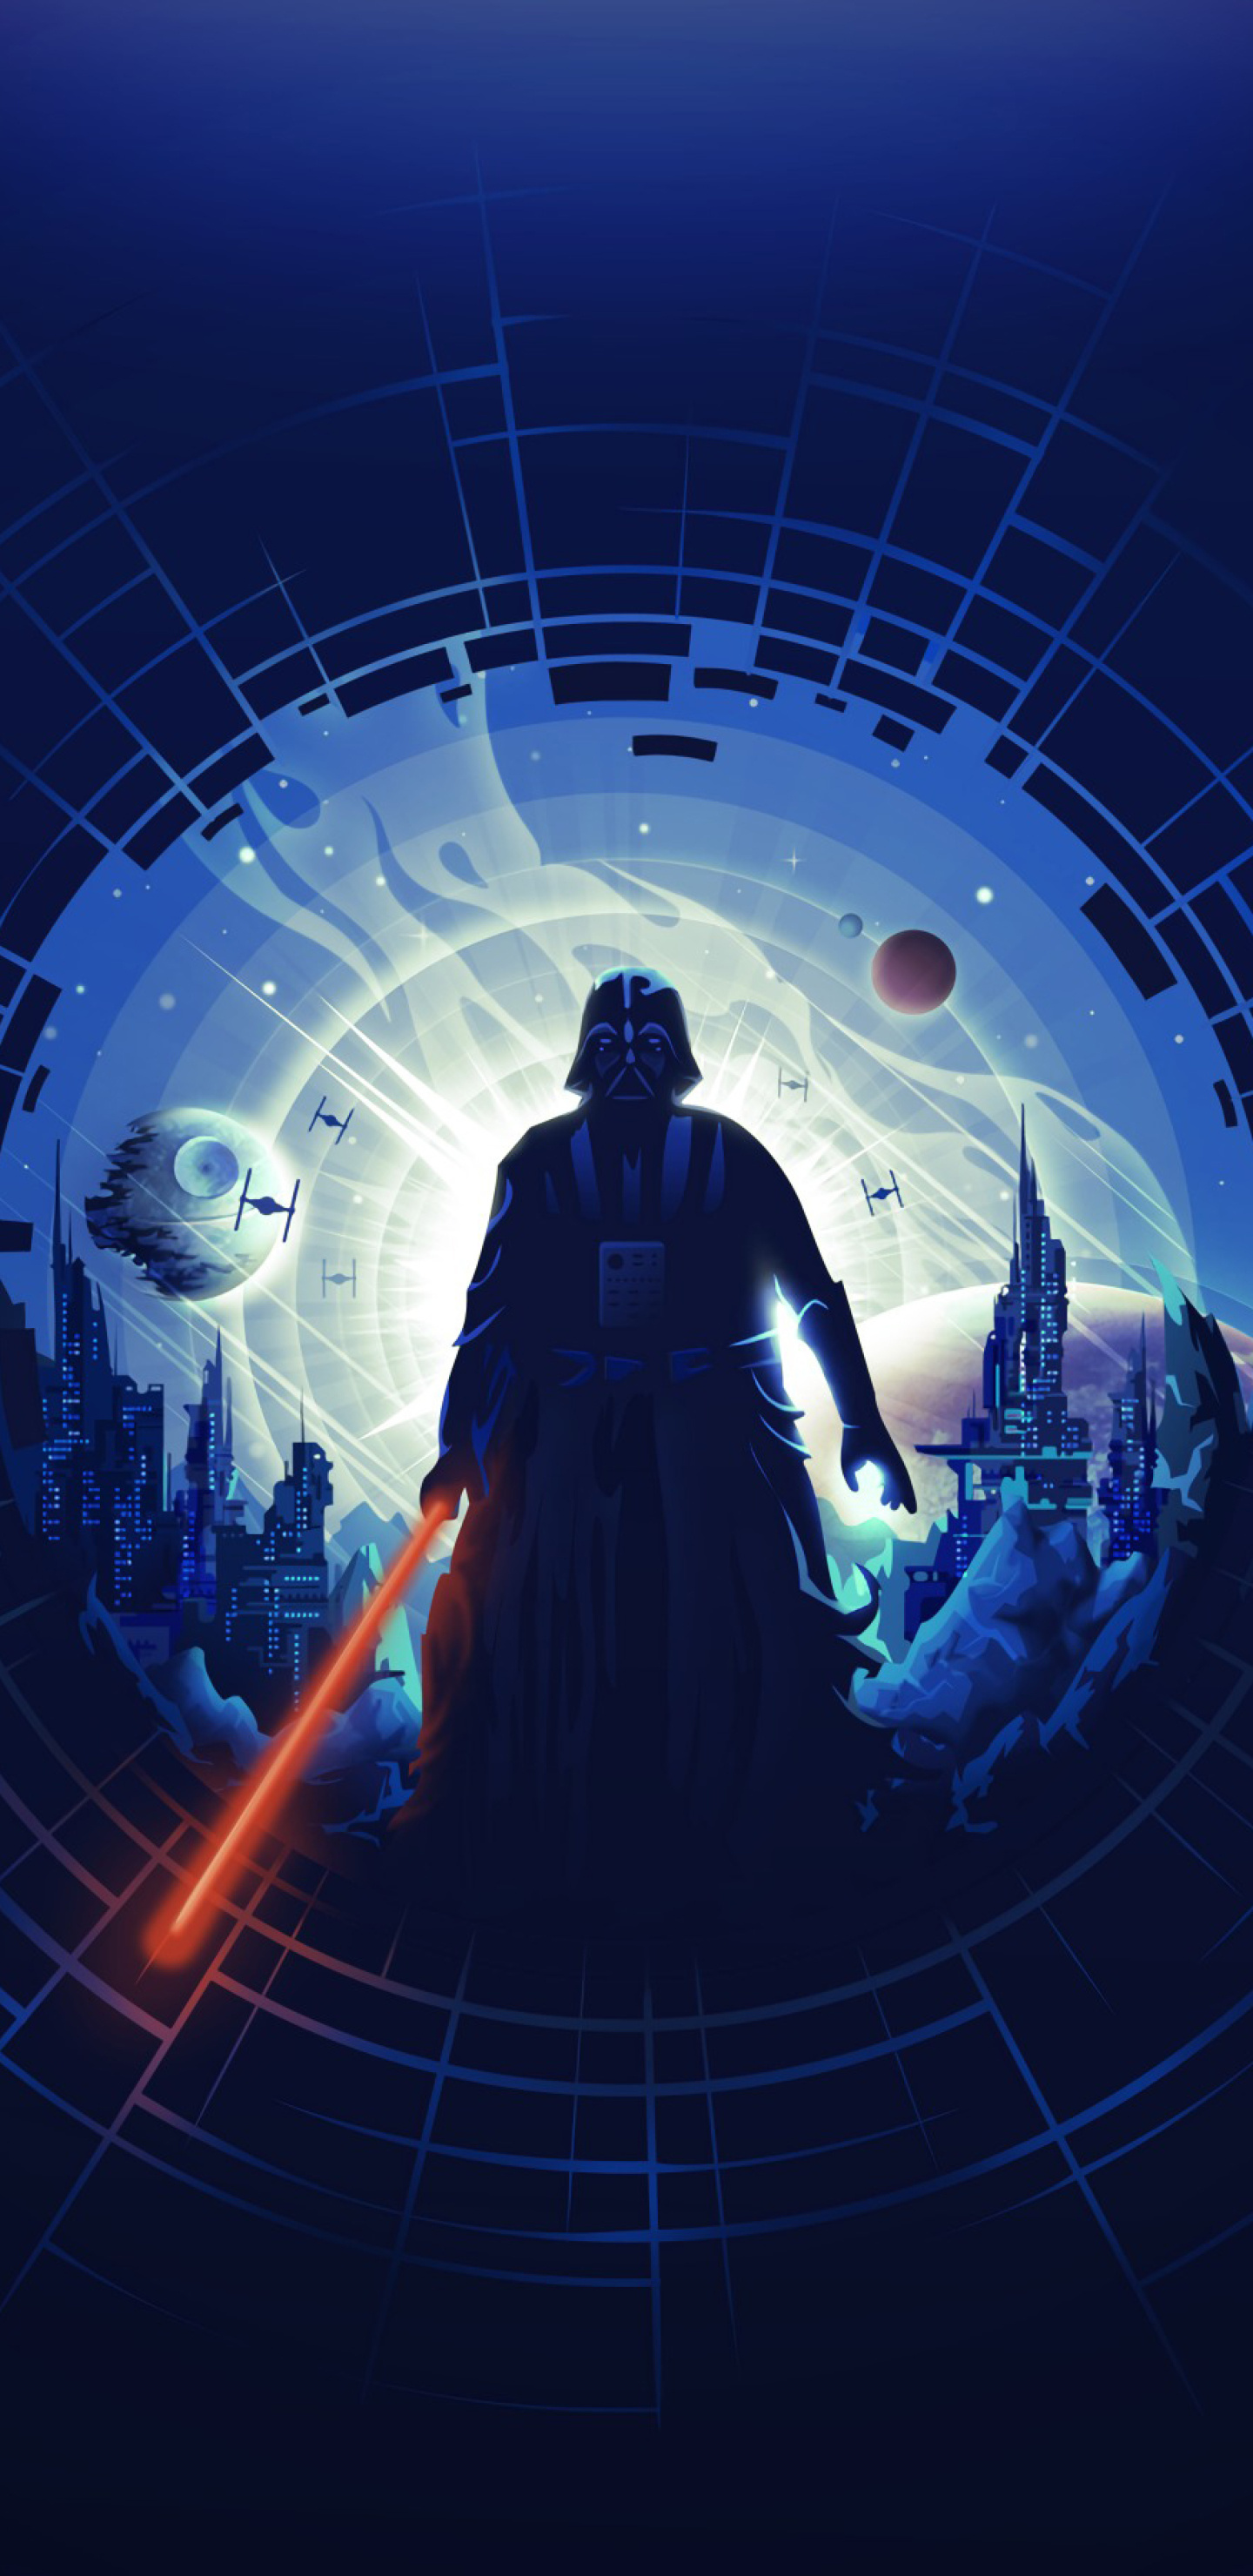 Darth Vader: The grandfather of Kylo Ren (Ben Solo), Anakin Skywalker. 1440x2960 HD Wallpaper.